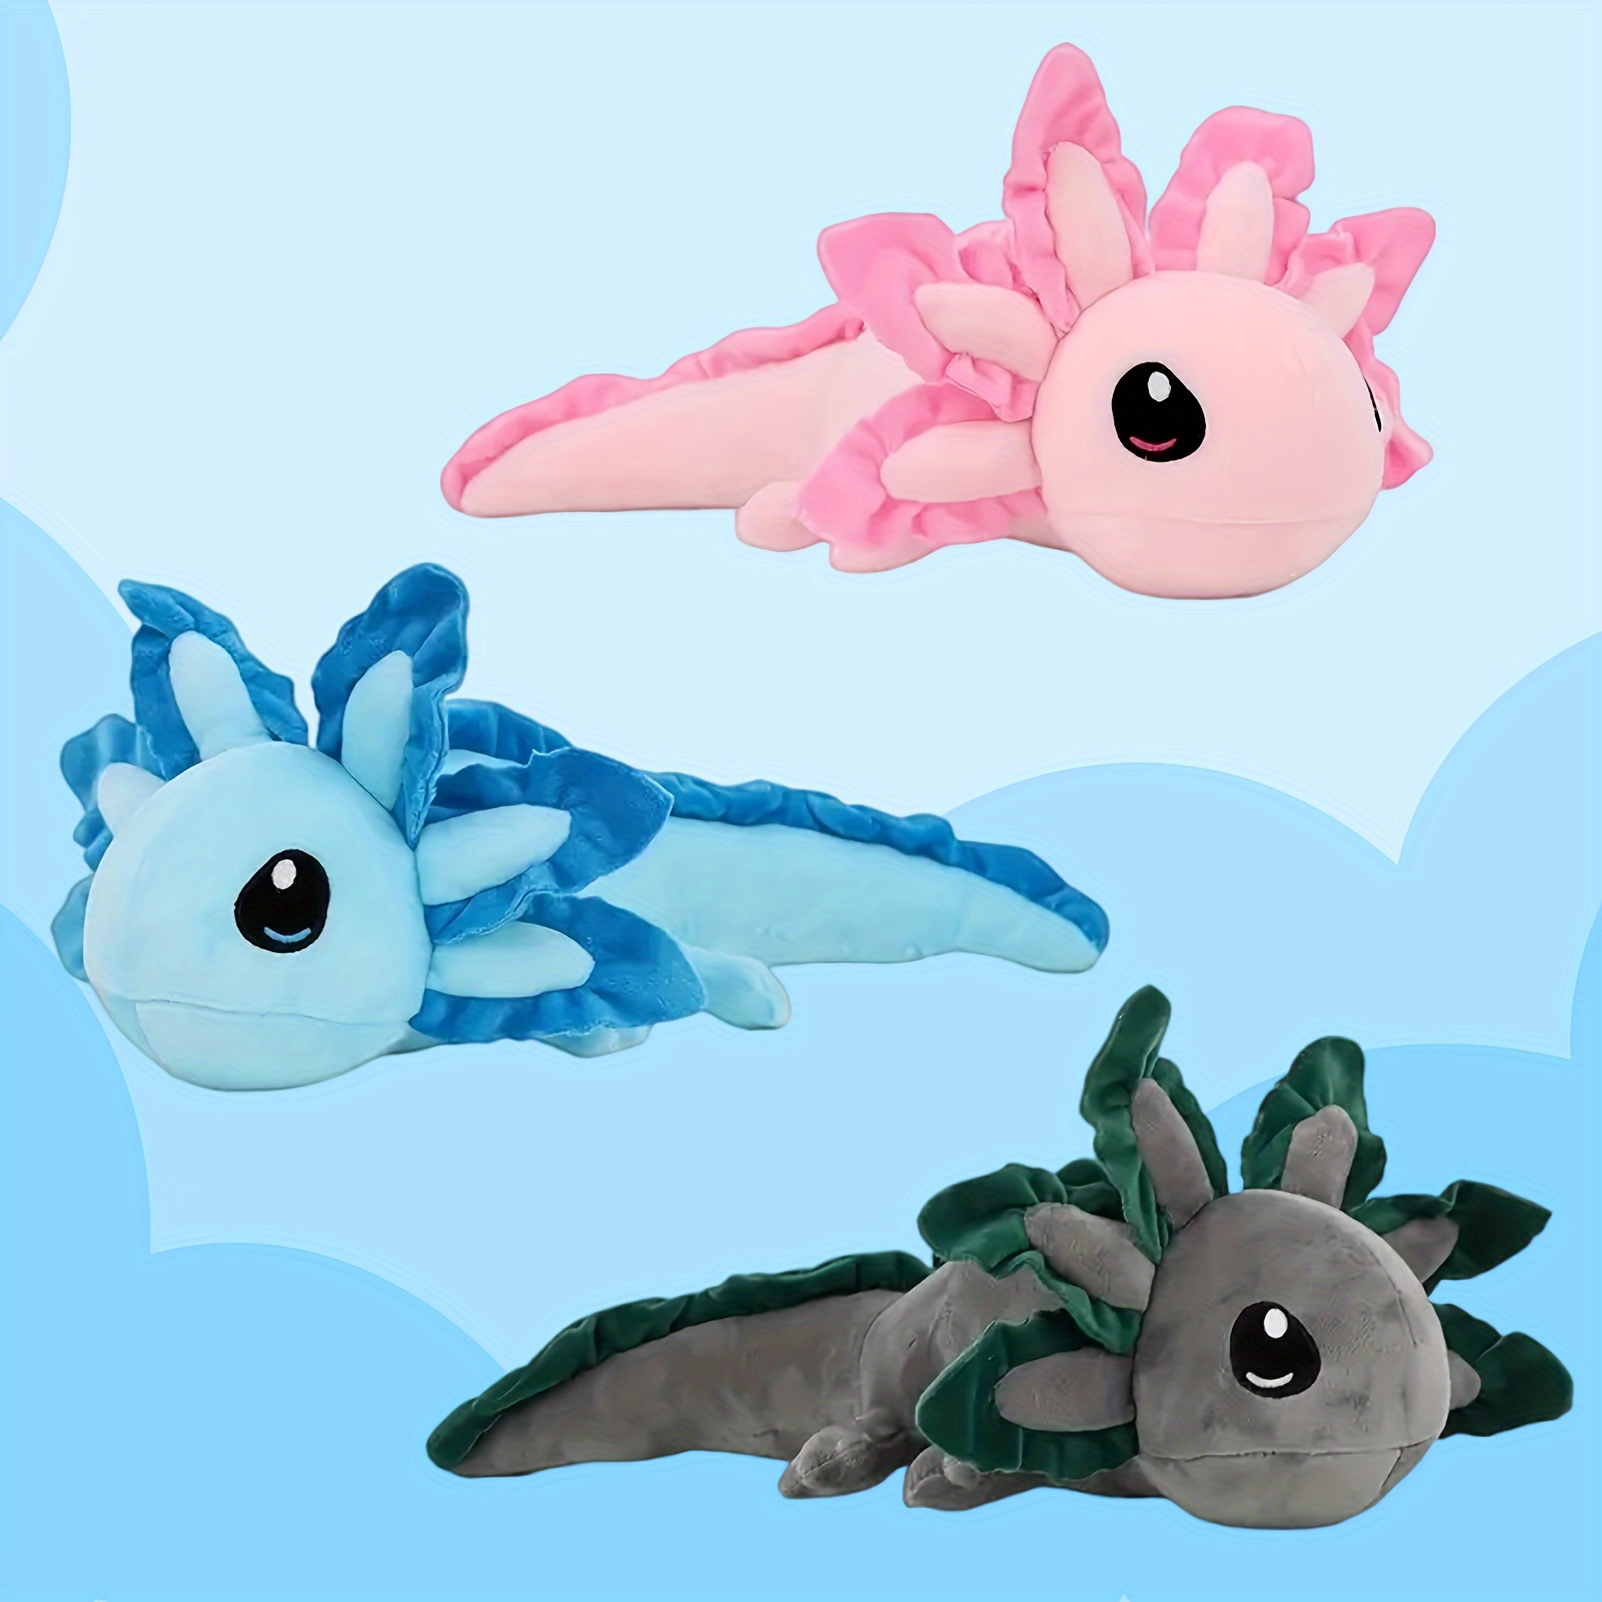 

1pc Adorable Axolotl Plush Toy, Soft Axolotl Stuffed Animals, Adults Gifts Christmas Gifts